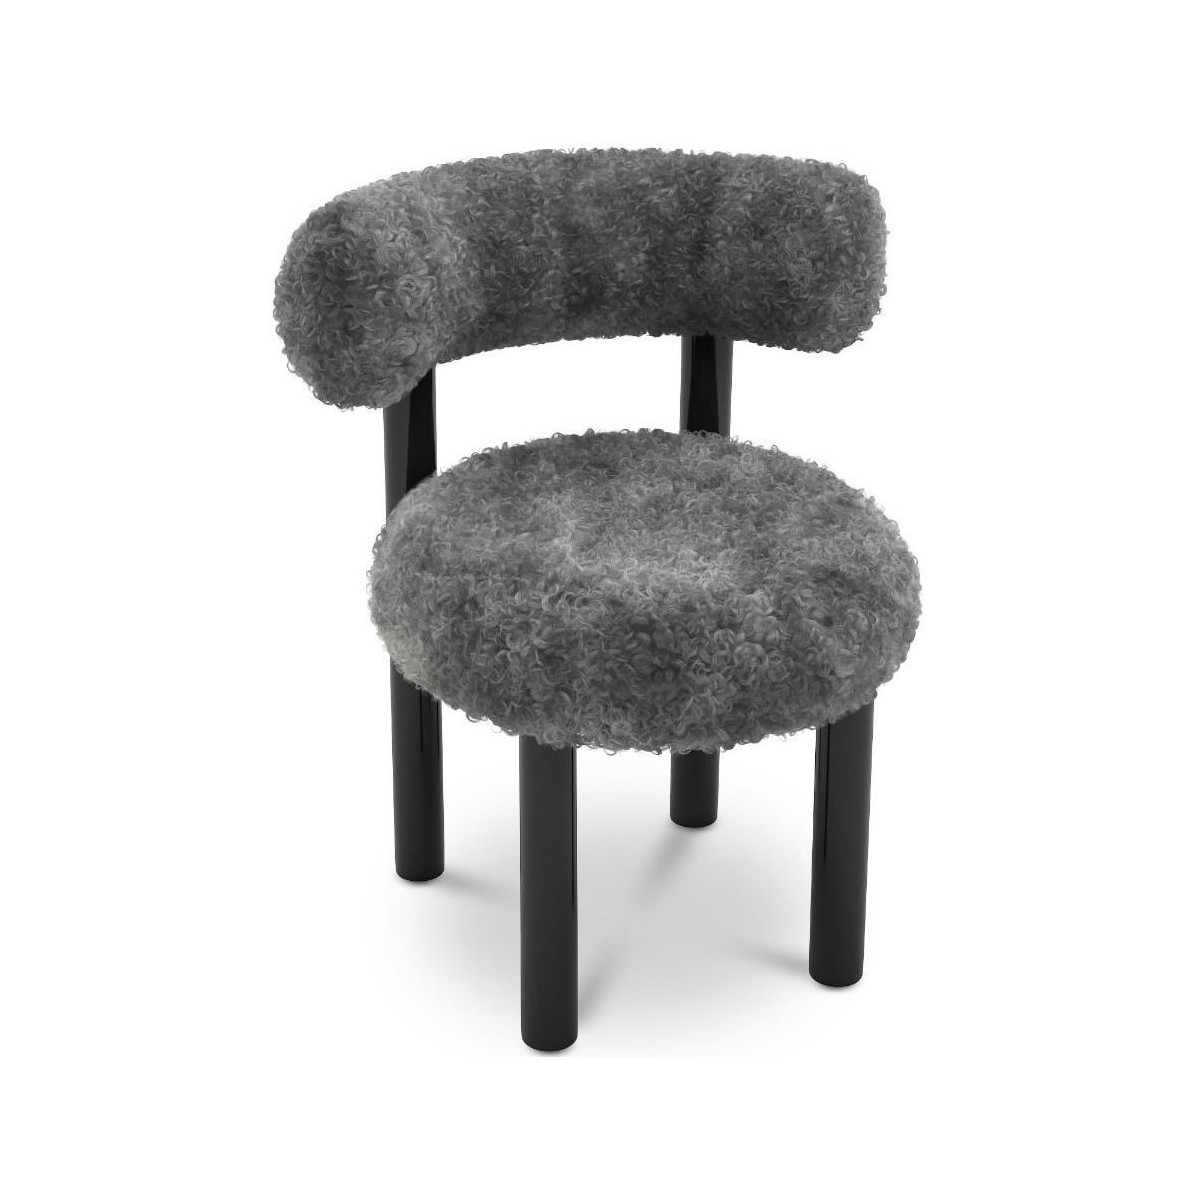 Gotland sheep 01 - Fat dining chair